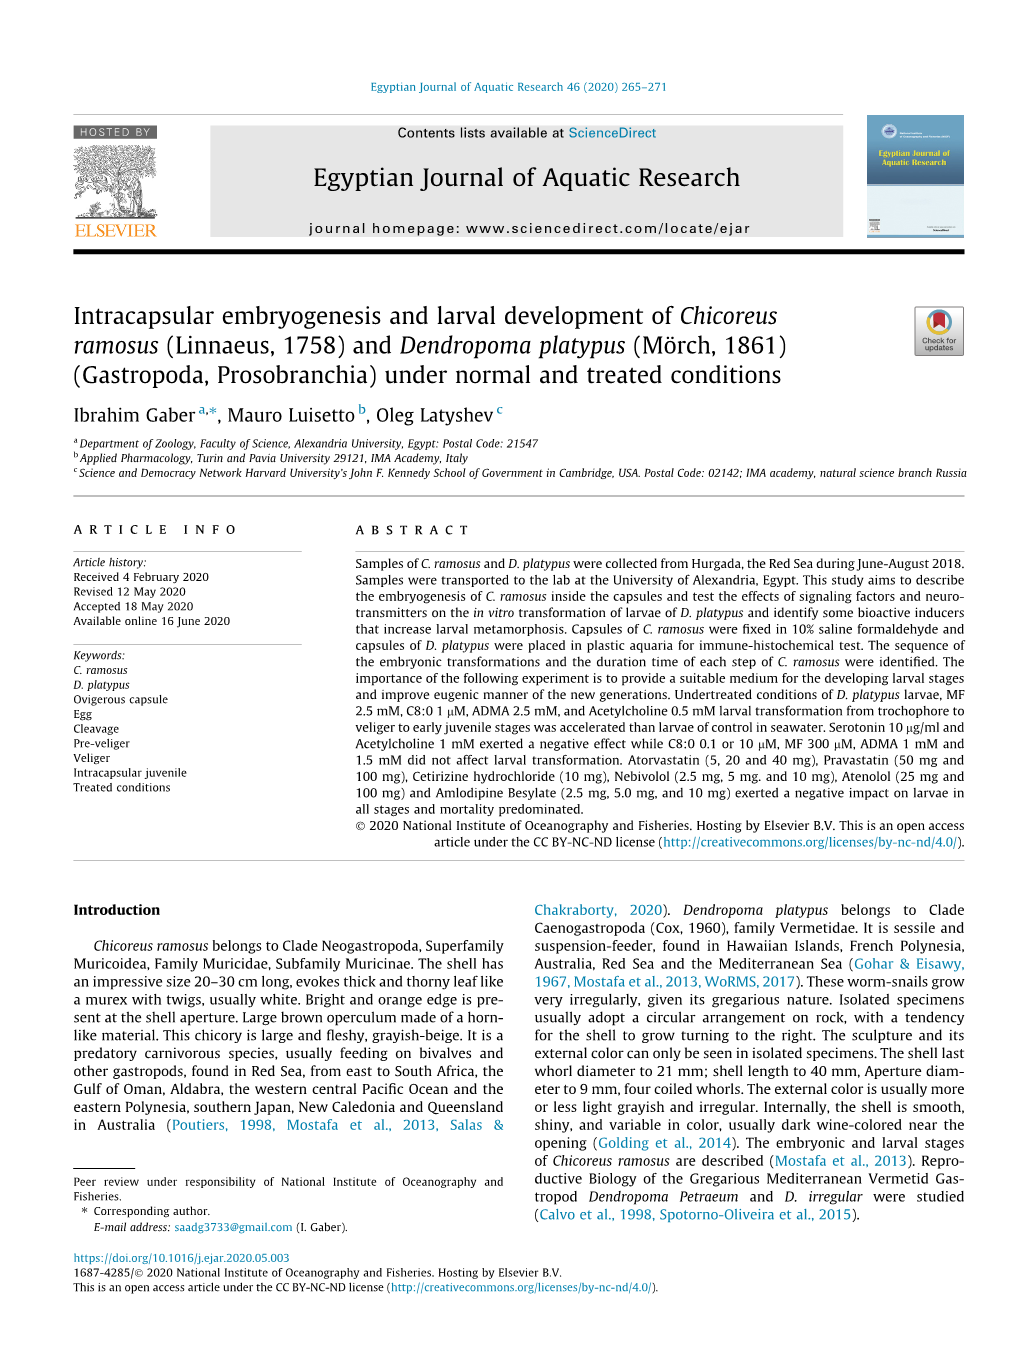 Intracapsular Embryogenesis and Larval Development of Chicoreus